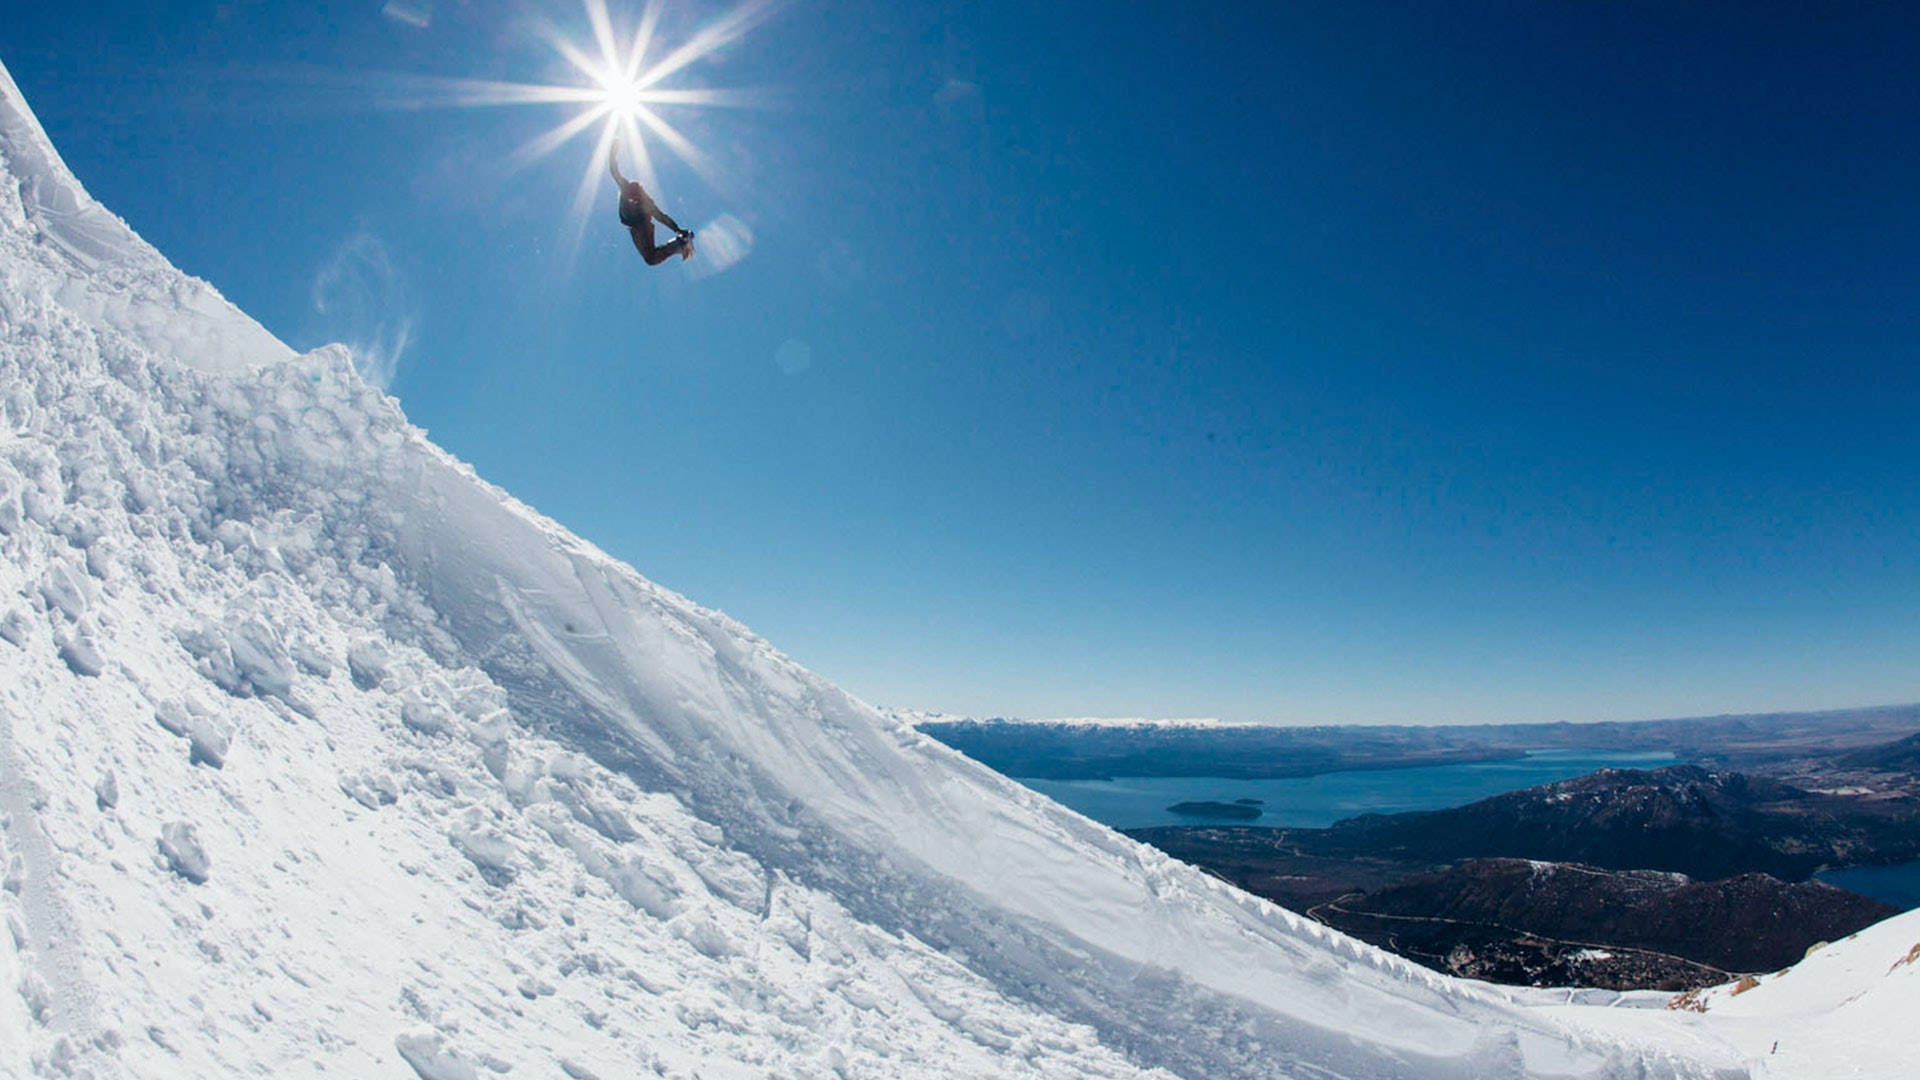 Snowboarding Under The Sun Background